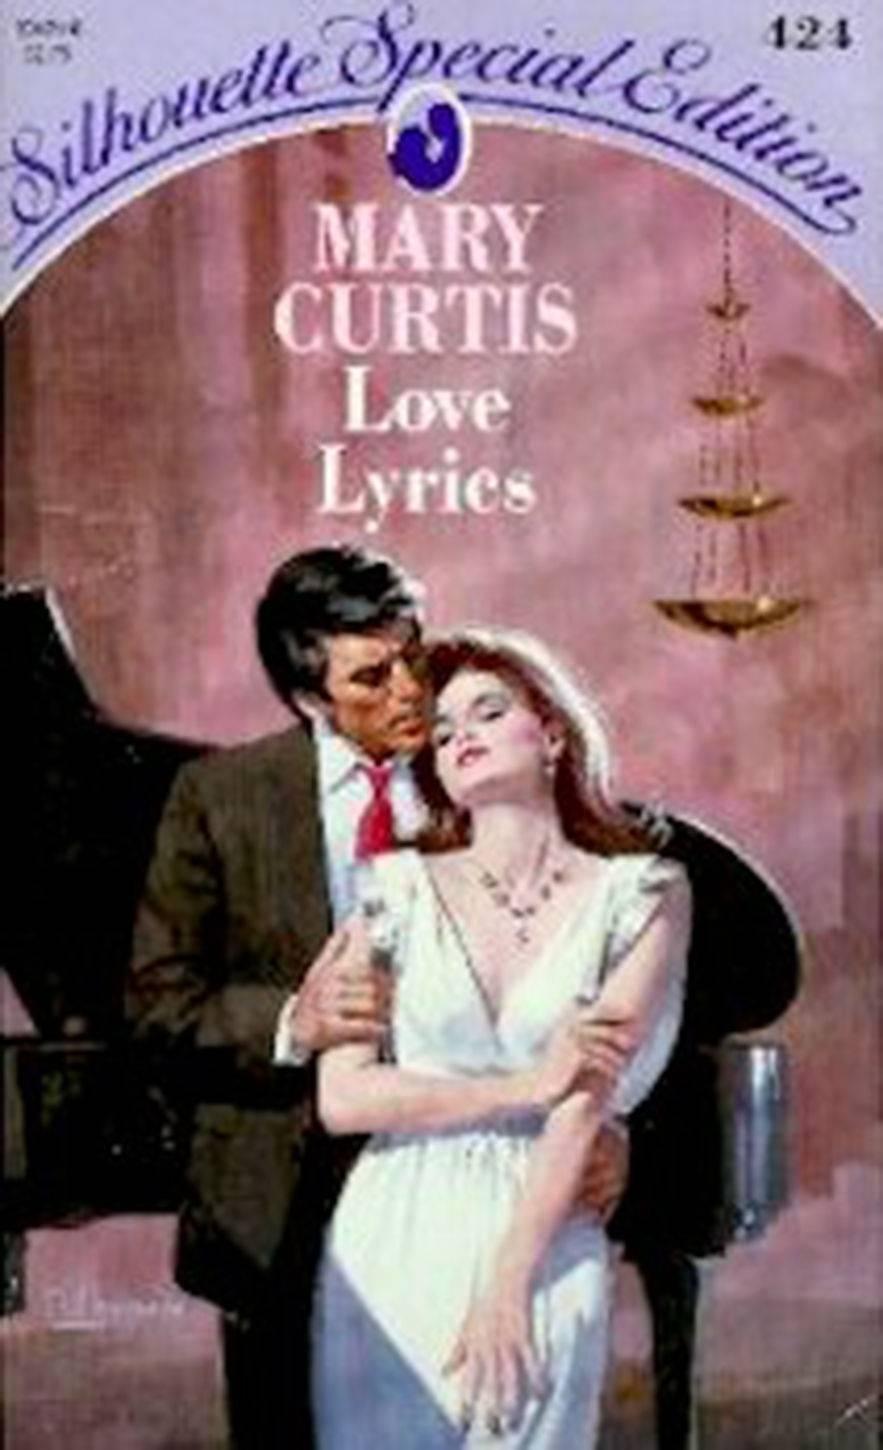 Love Lyrics, Paperback Cover For Sale 1